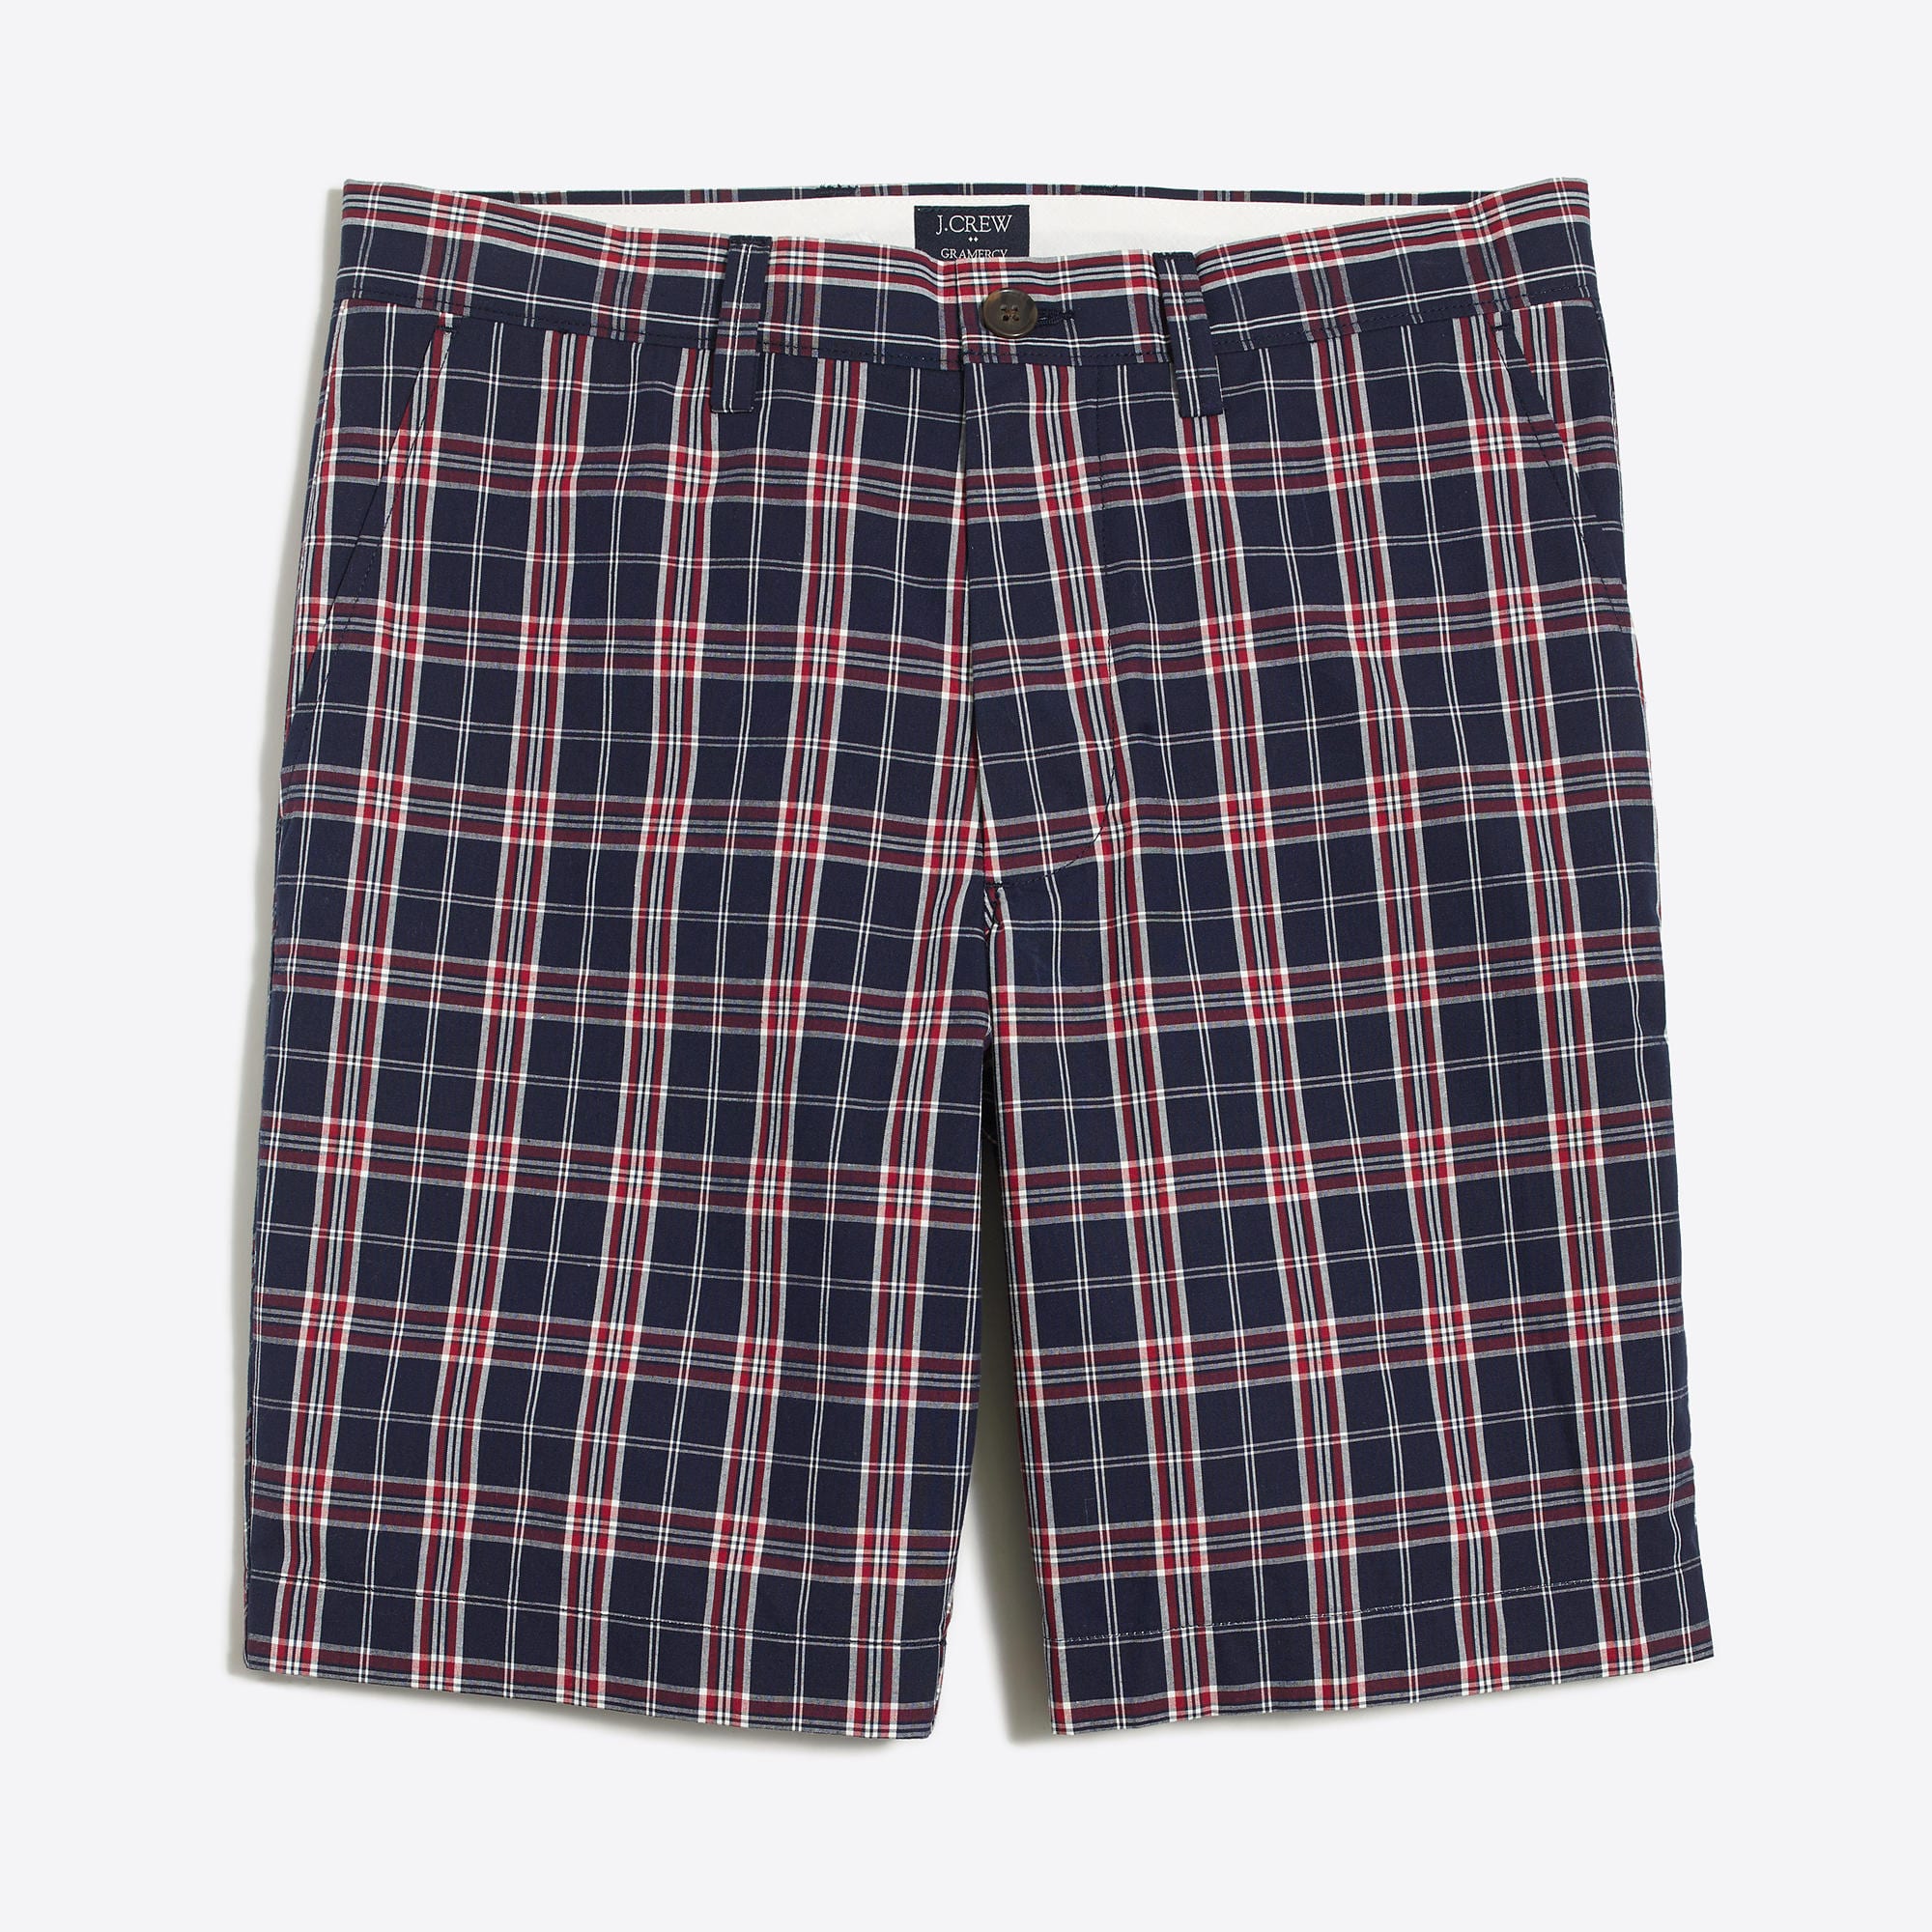 plaid-shorts-for-men-red-white-navy-blue-2017-2018